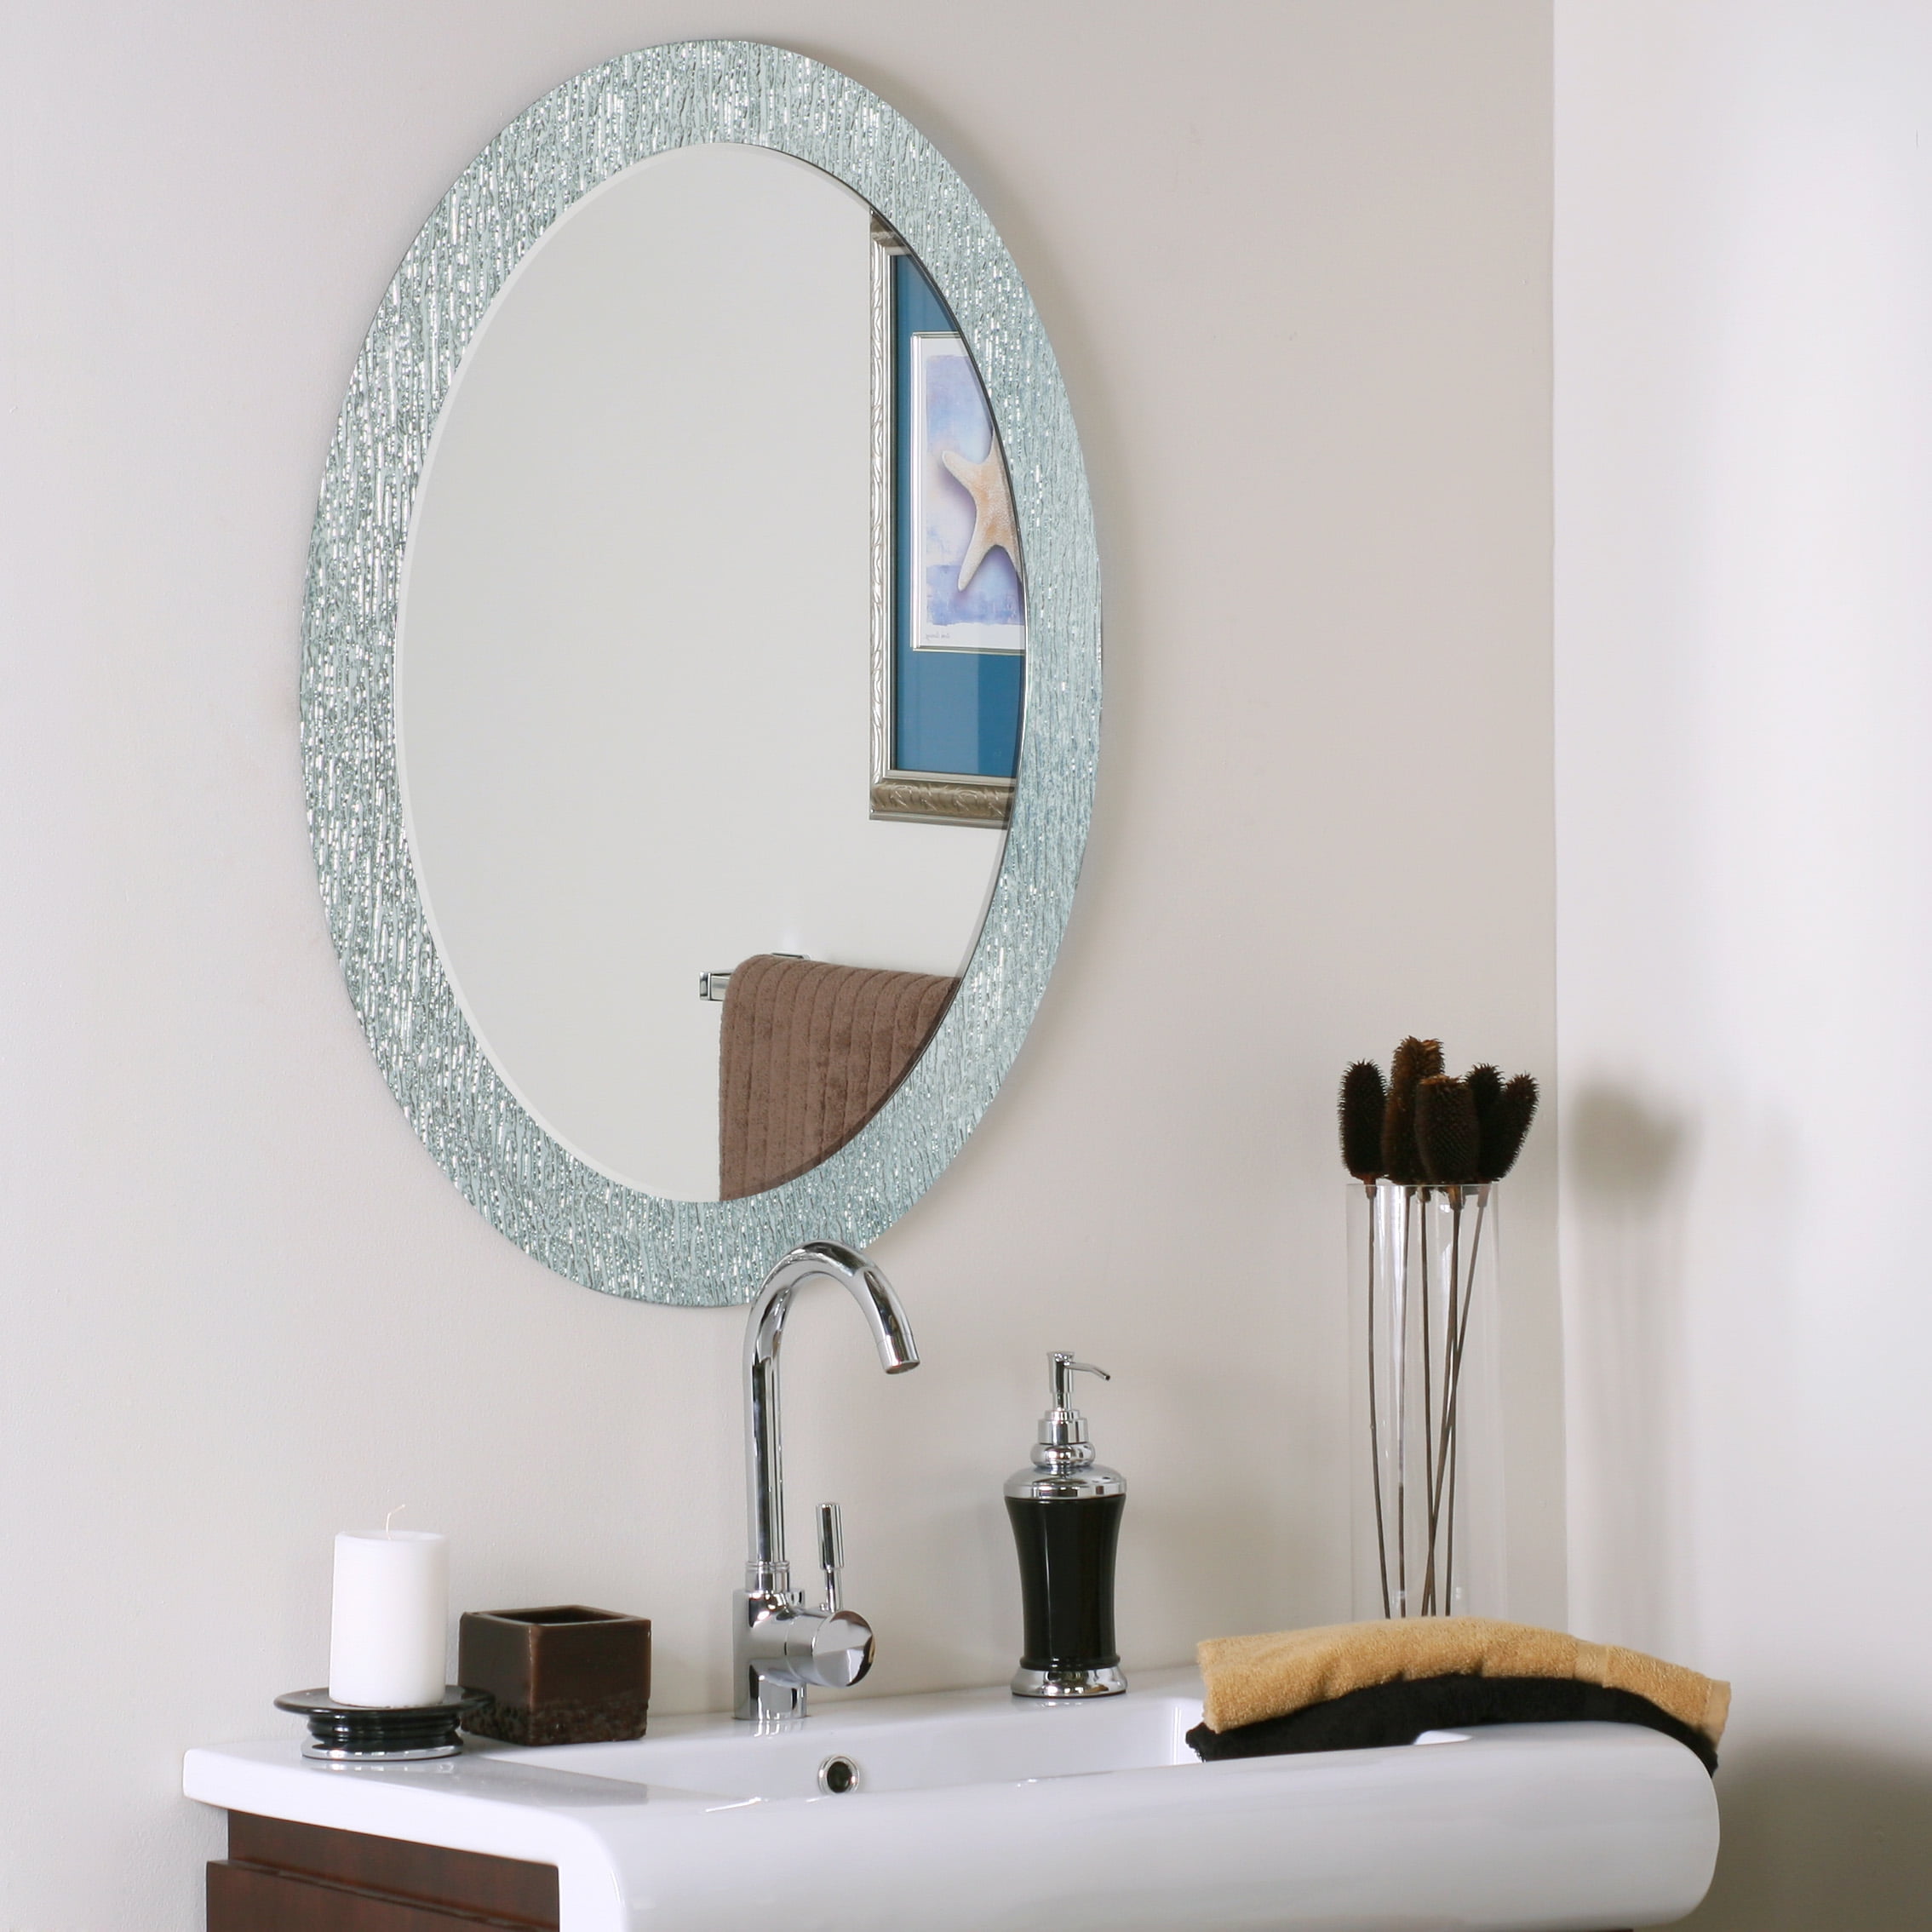 Molten bathroom mirror (Oval) - Walmart.com - Walmart.com